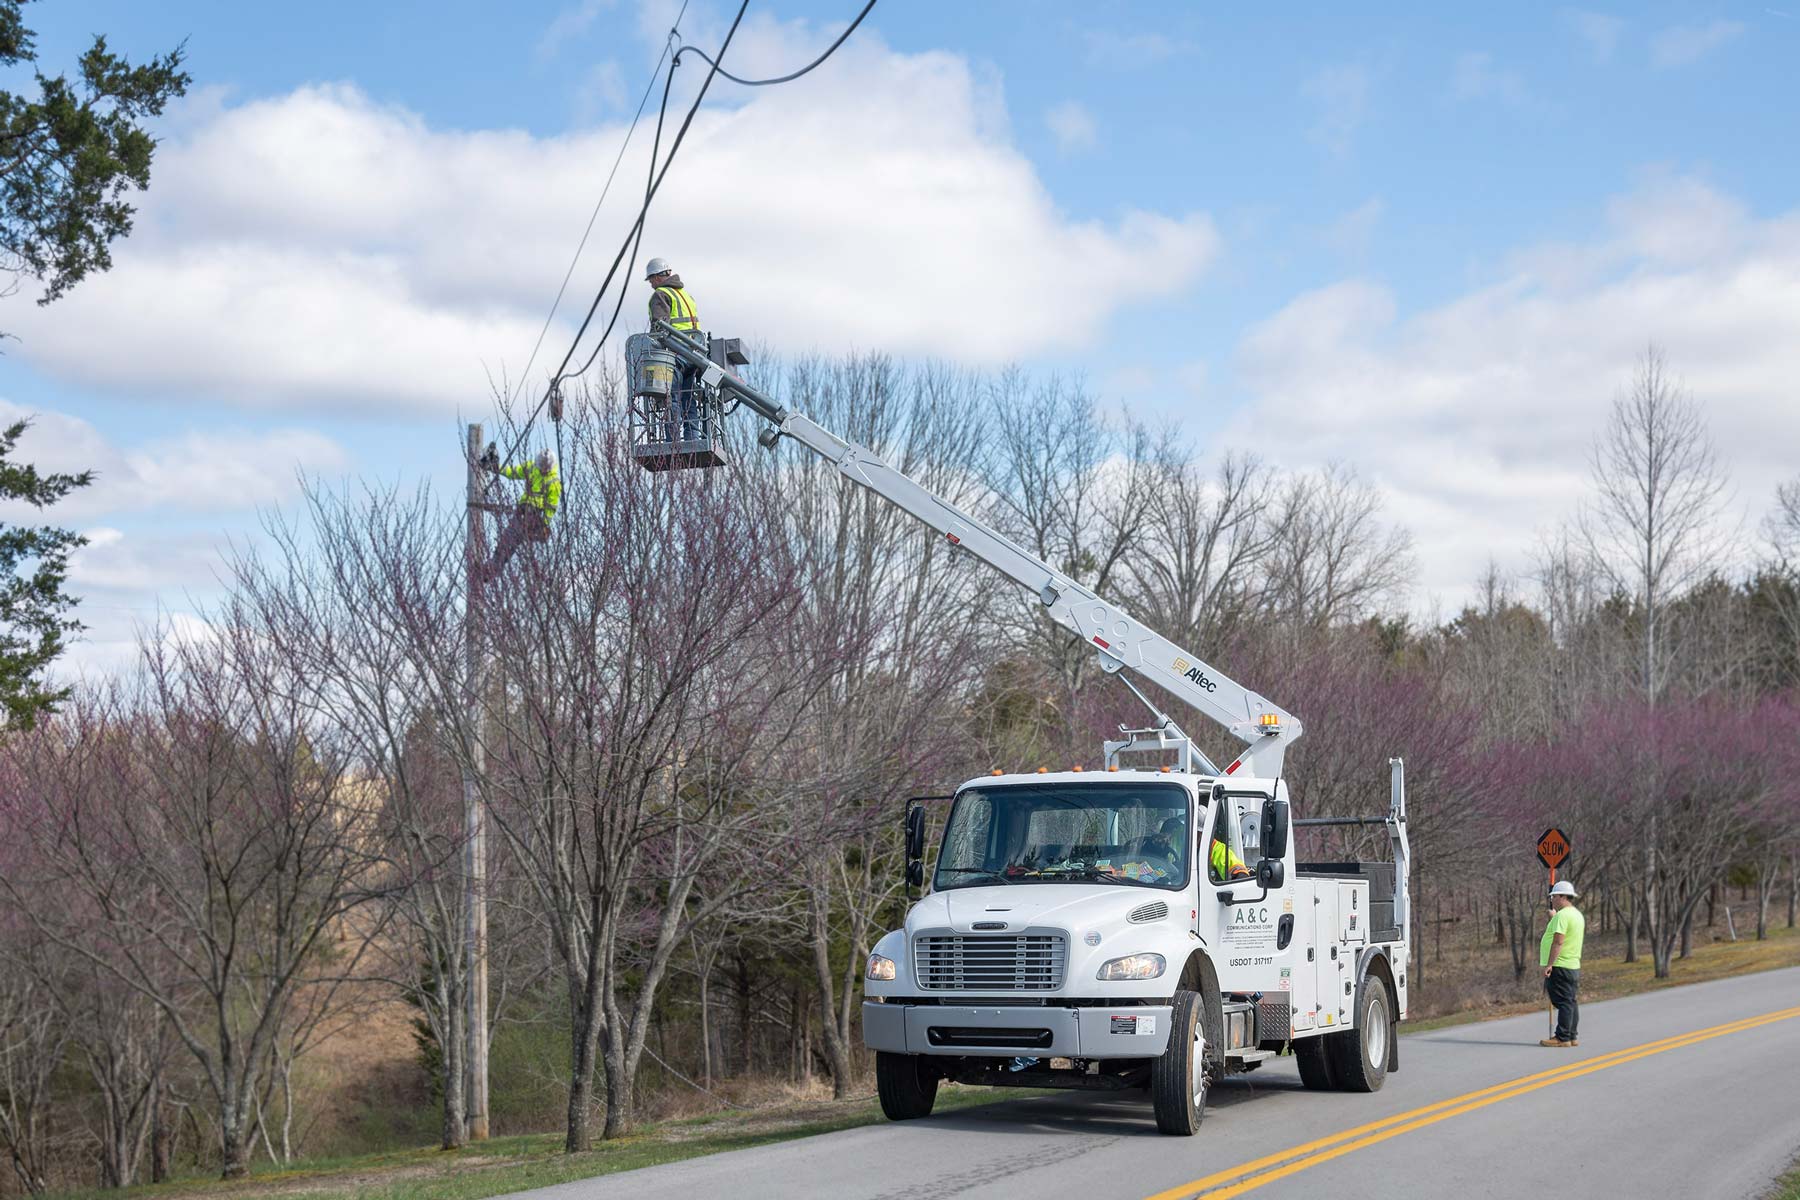 DUO Broadband contractors installing fiber optic cable in a rural area.